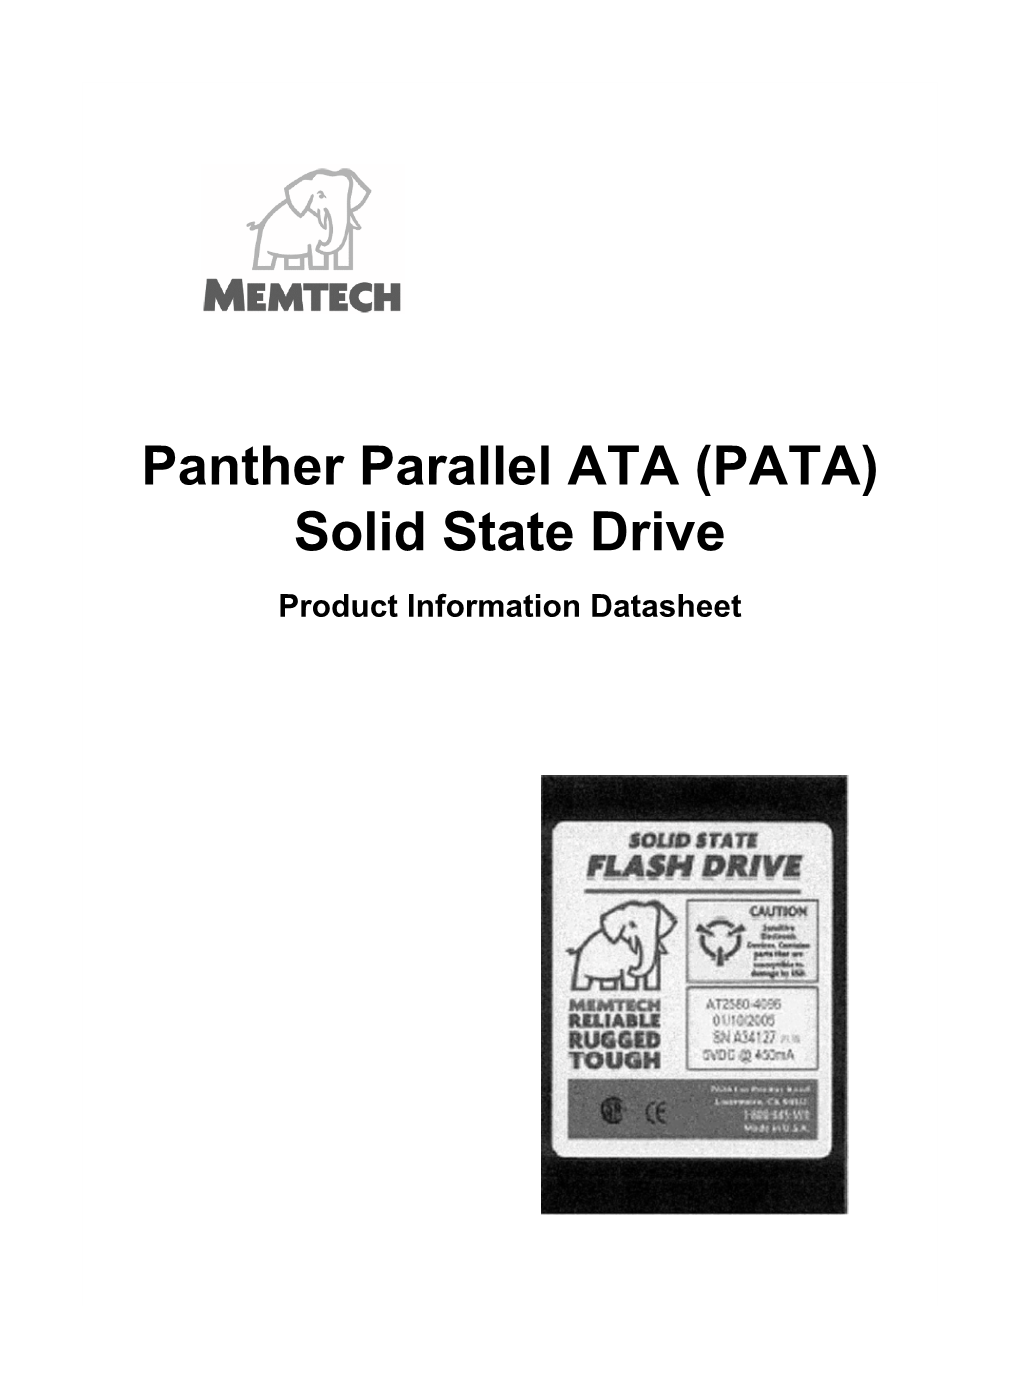 Panther Parallel ATA (PATA) Solid State Drive Datasheet